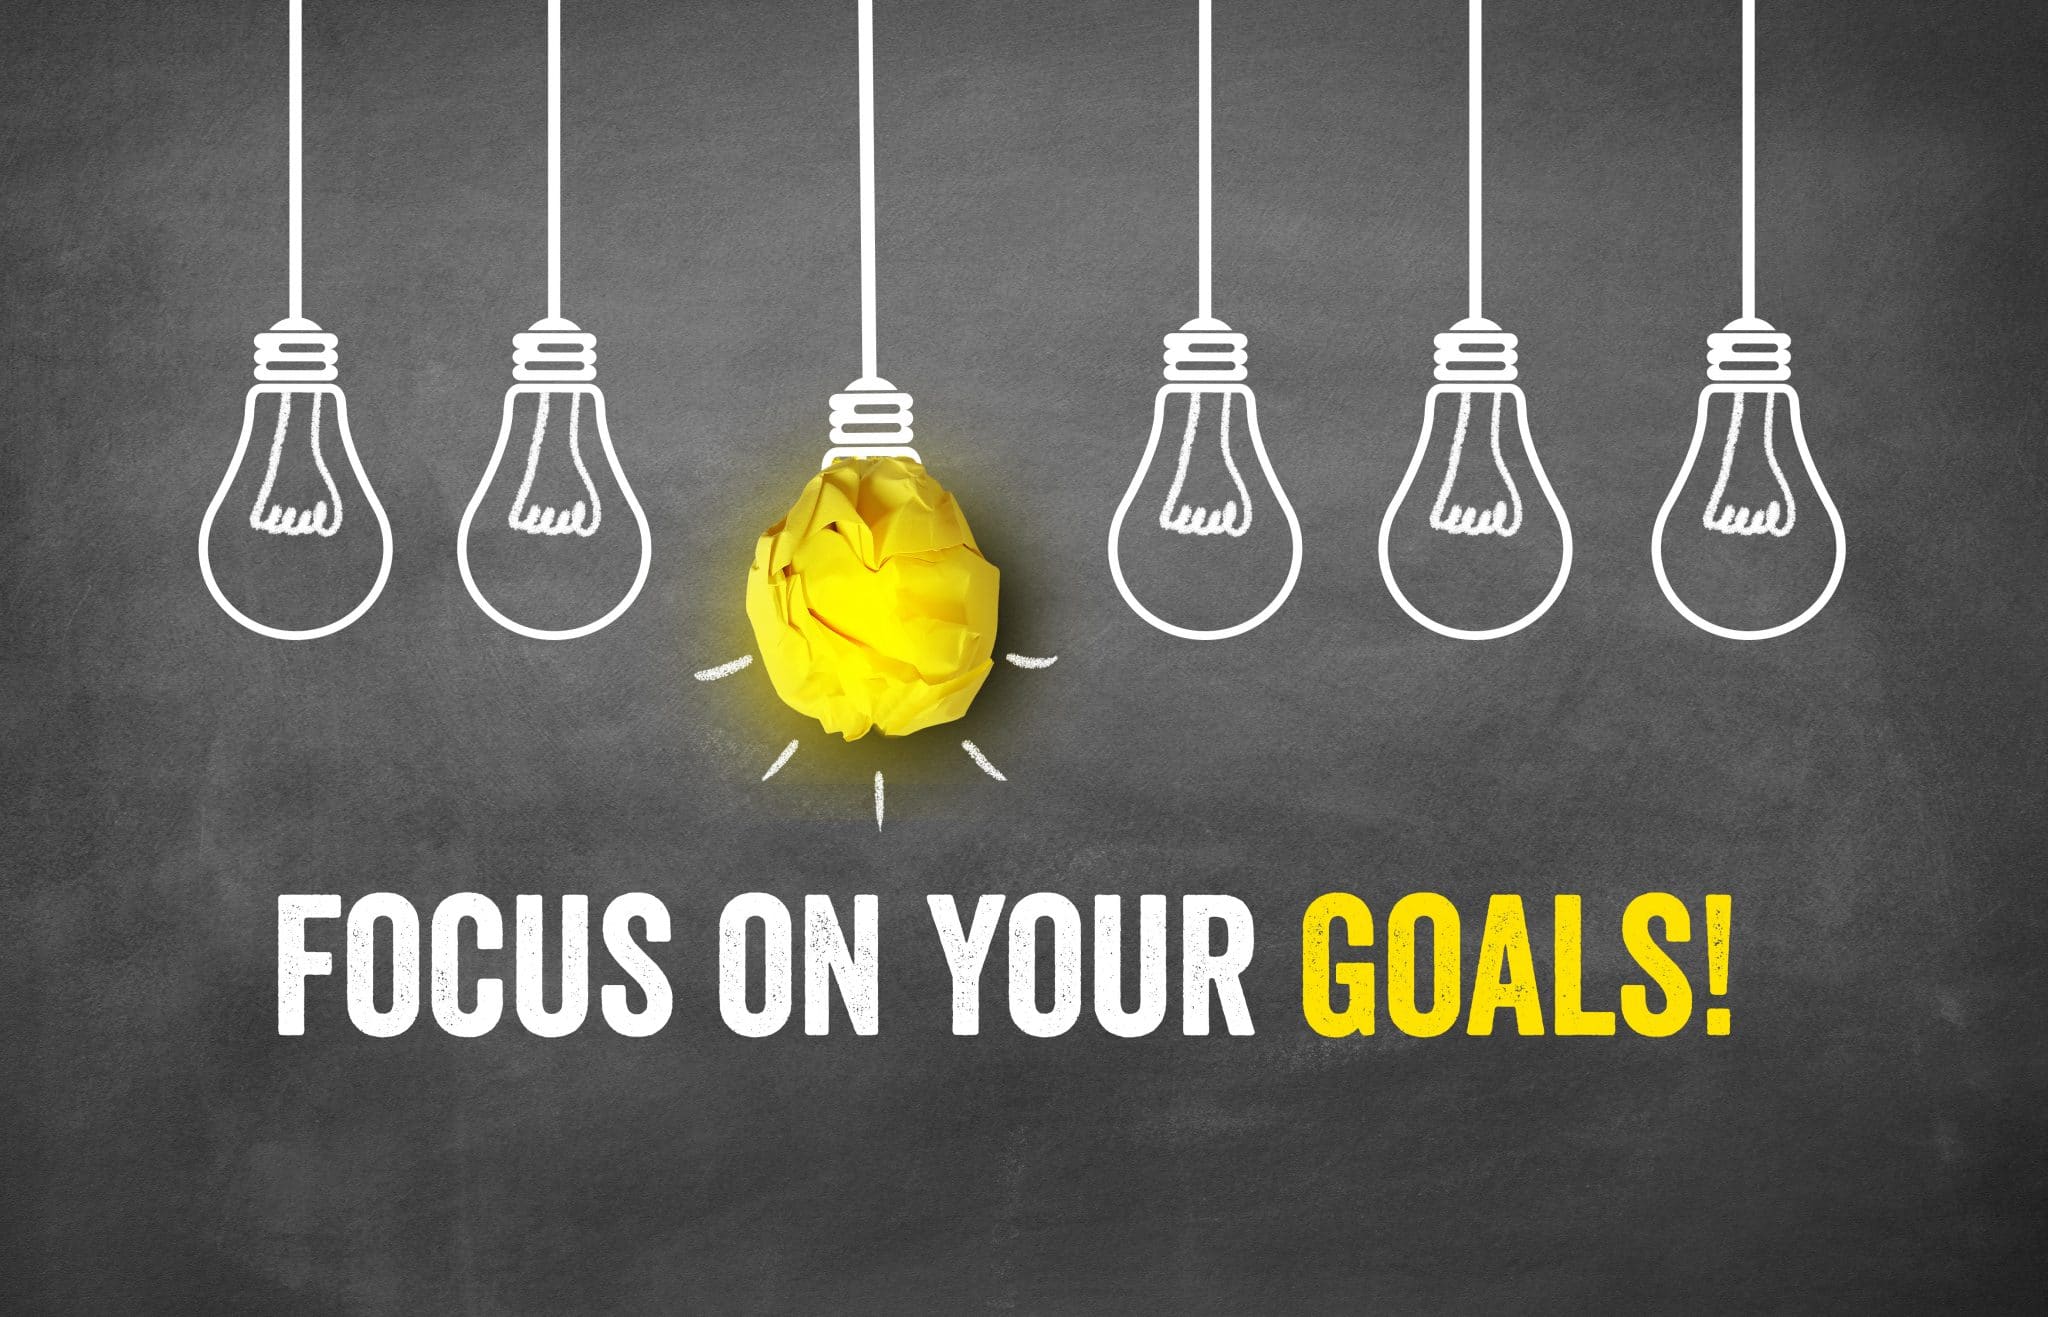 Focus on your goals!